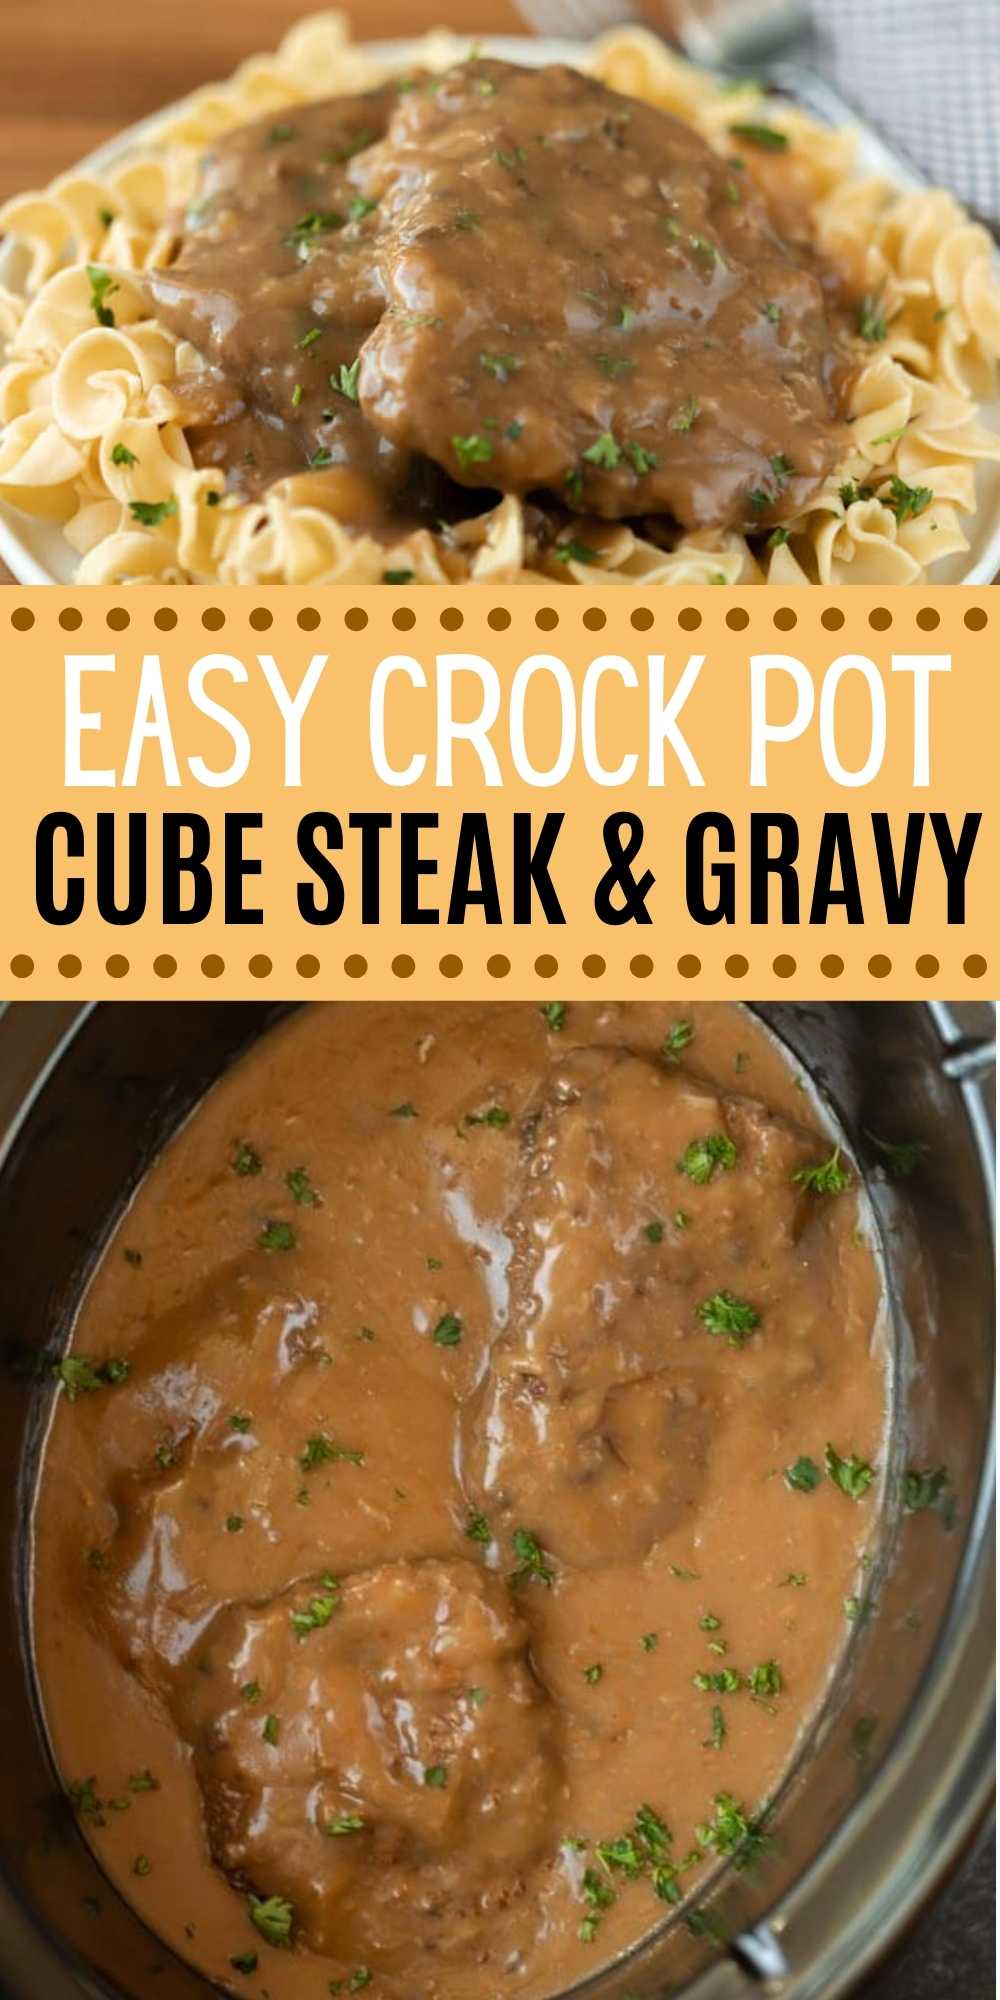 Crock pot Cube Steak and Gravy Recipe